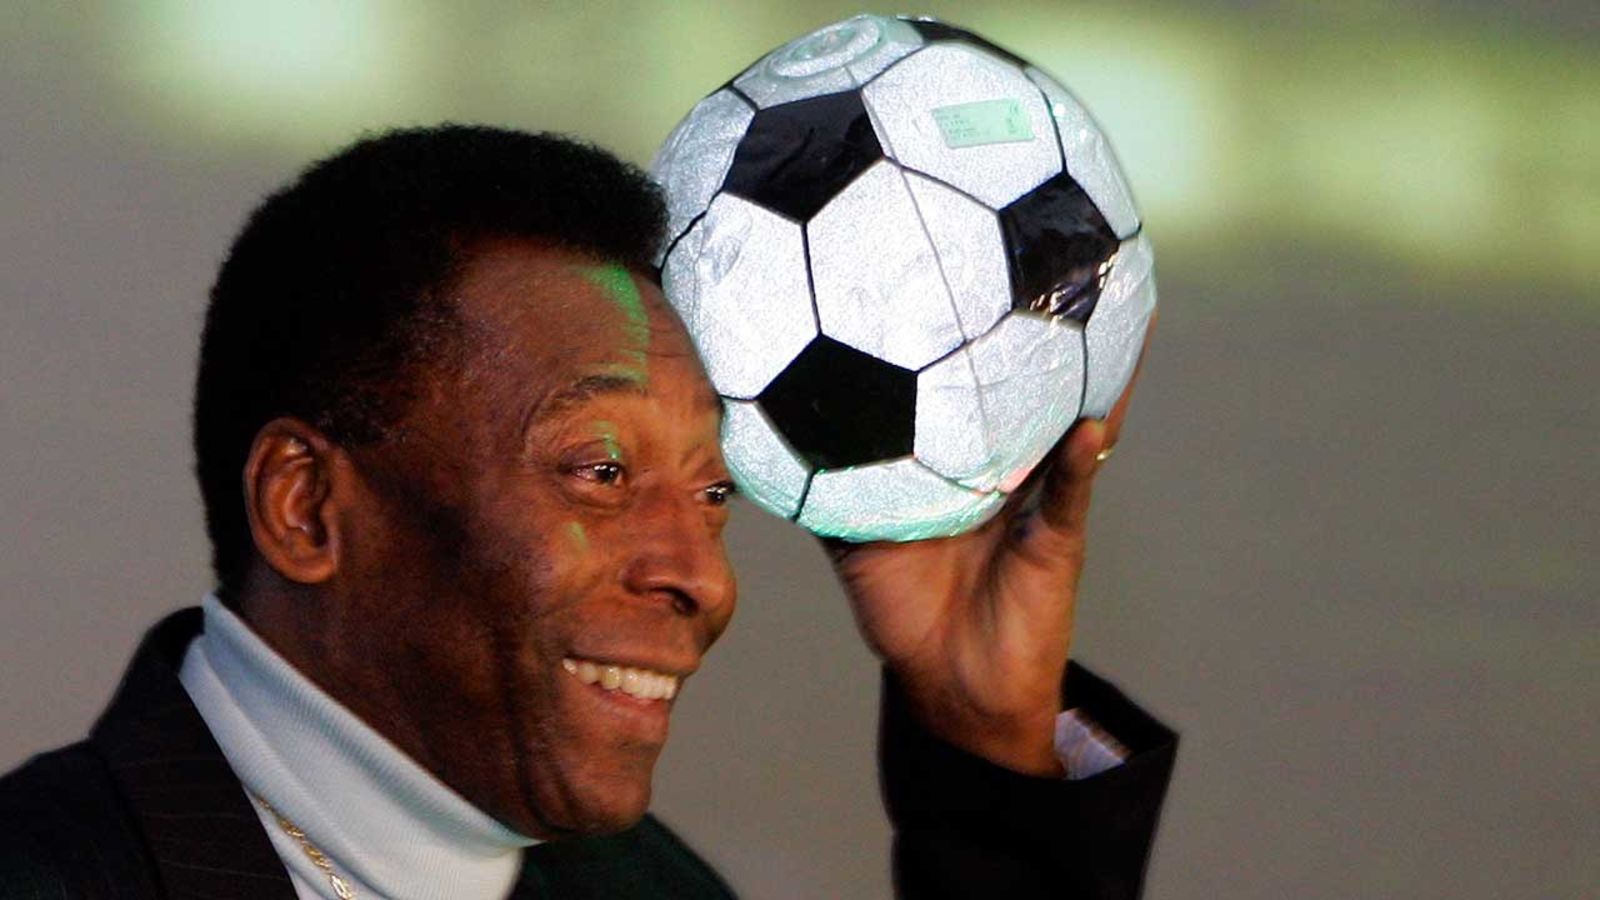 Three-time world soccer champion Pelé is suddenly hospitalized